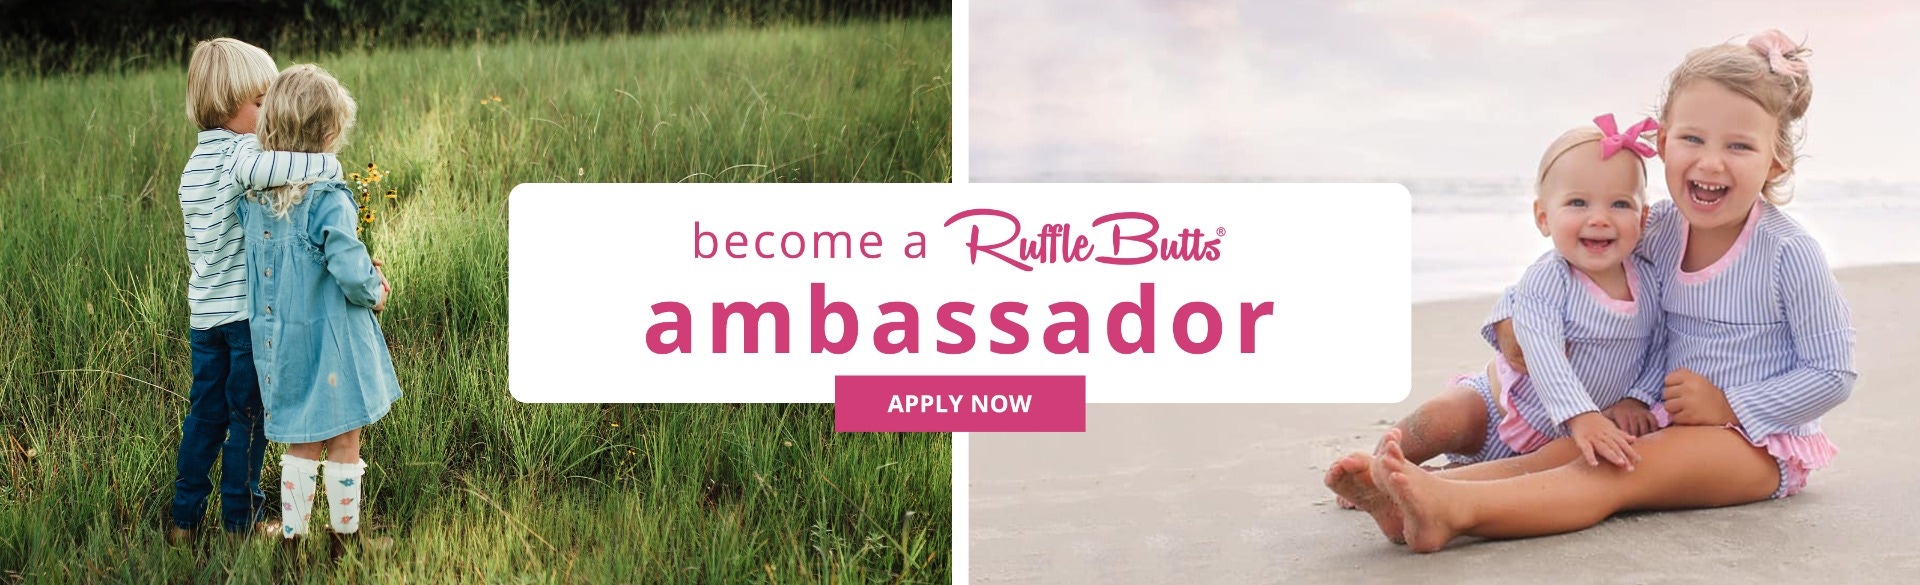 RuffleButts Ambassador Program